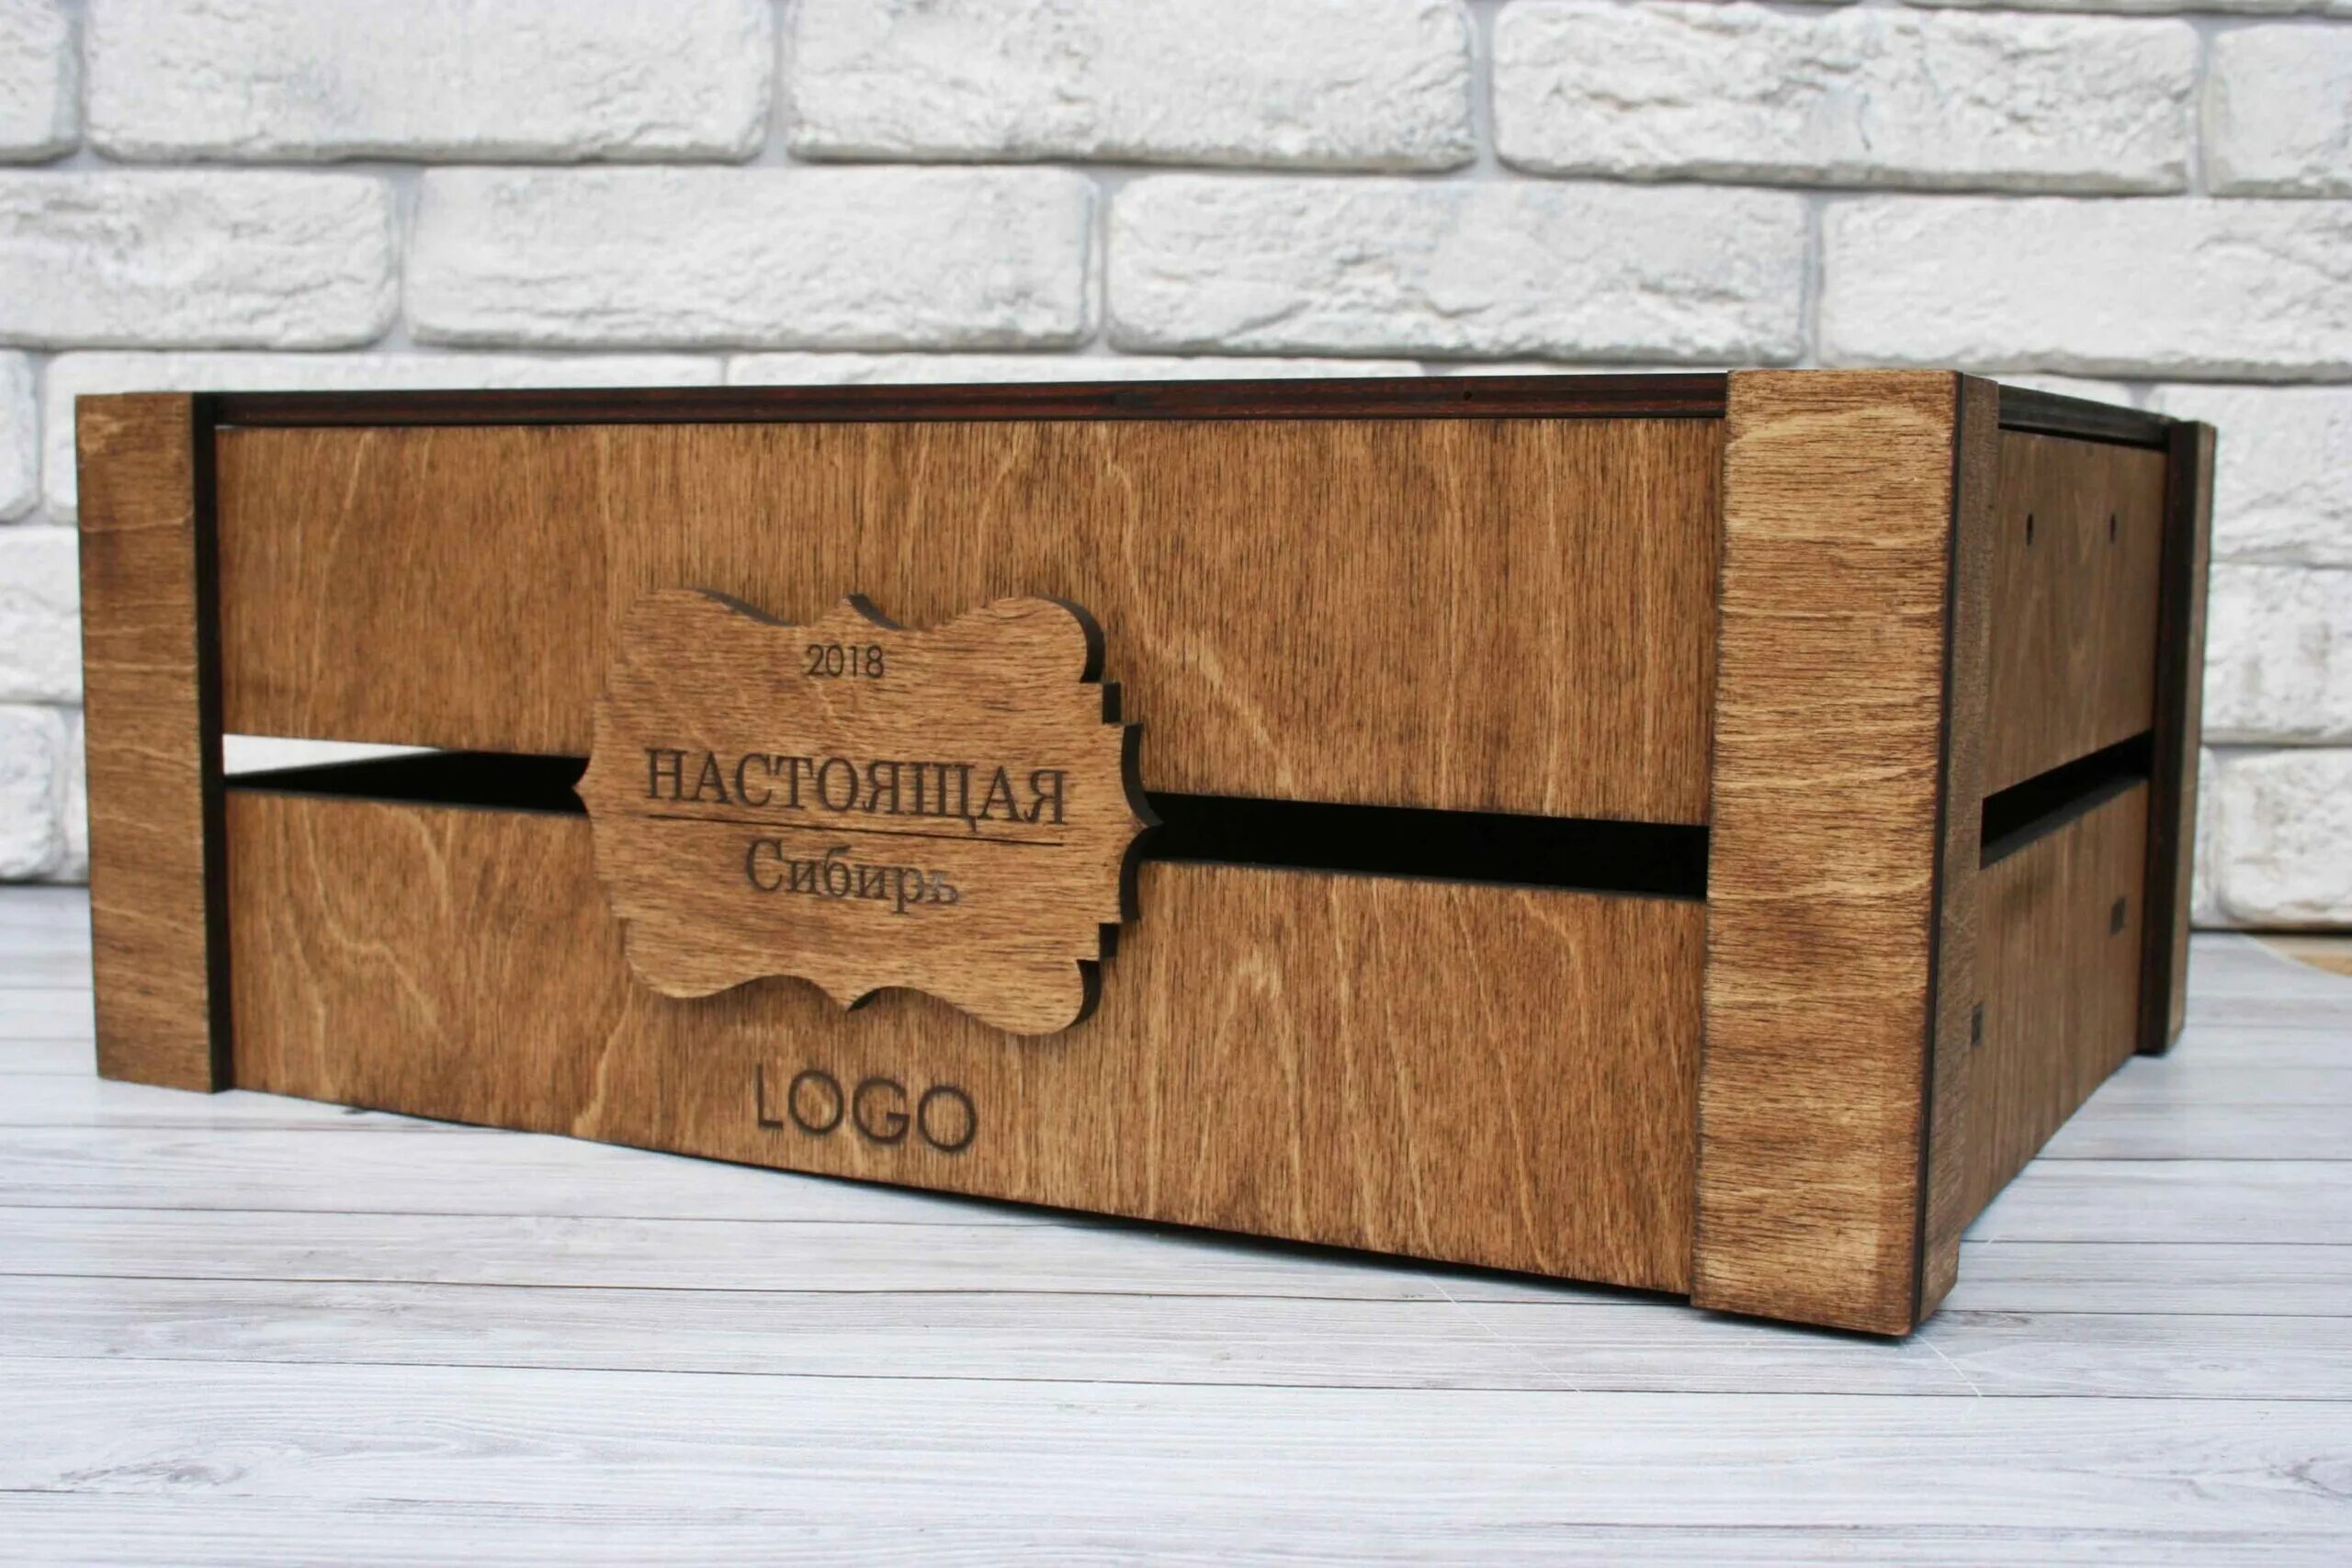 Wooden купить. "Ящик деревянный футляр на 1 бут. Магнум (бук)  Box ""Box 1 Bottle Magnum"" ". Деревянные коробки для подарков. Подарочная деревянная коробка. Деревянный короб.